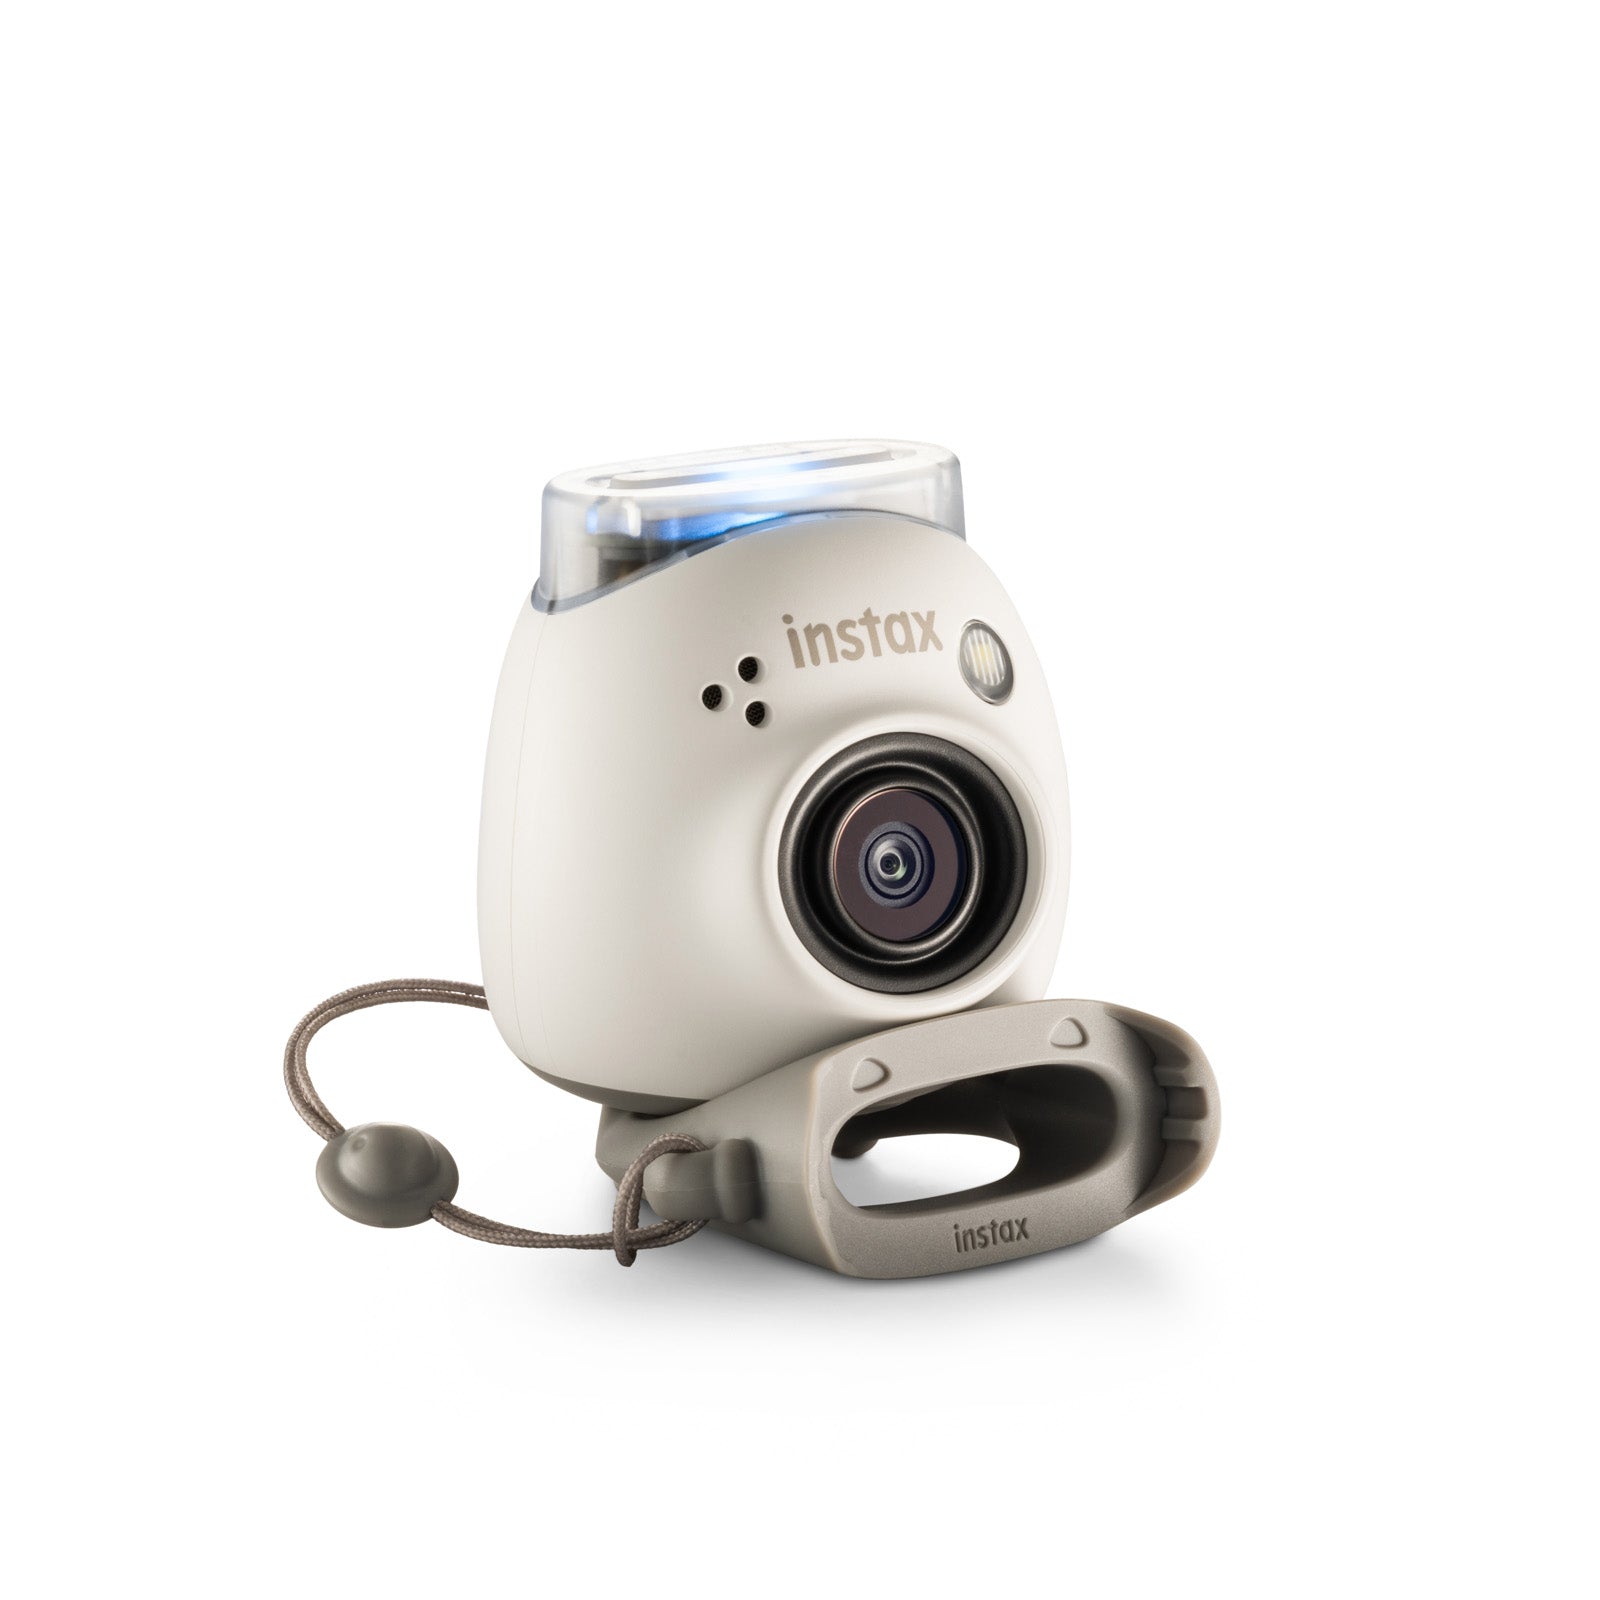 Fujifilm Instax PAL Digital Camera with Mini Link 2 Printer Bundle - Clay White - maplin.co.uk